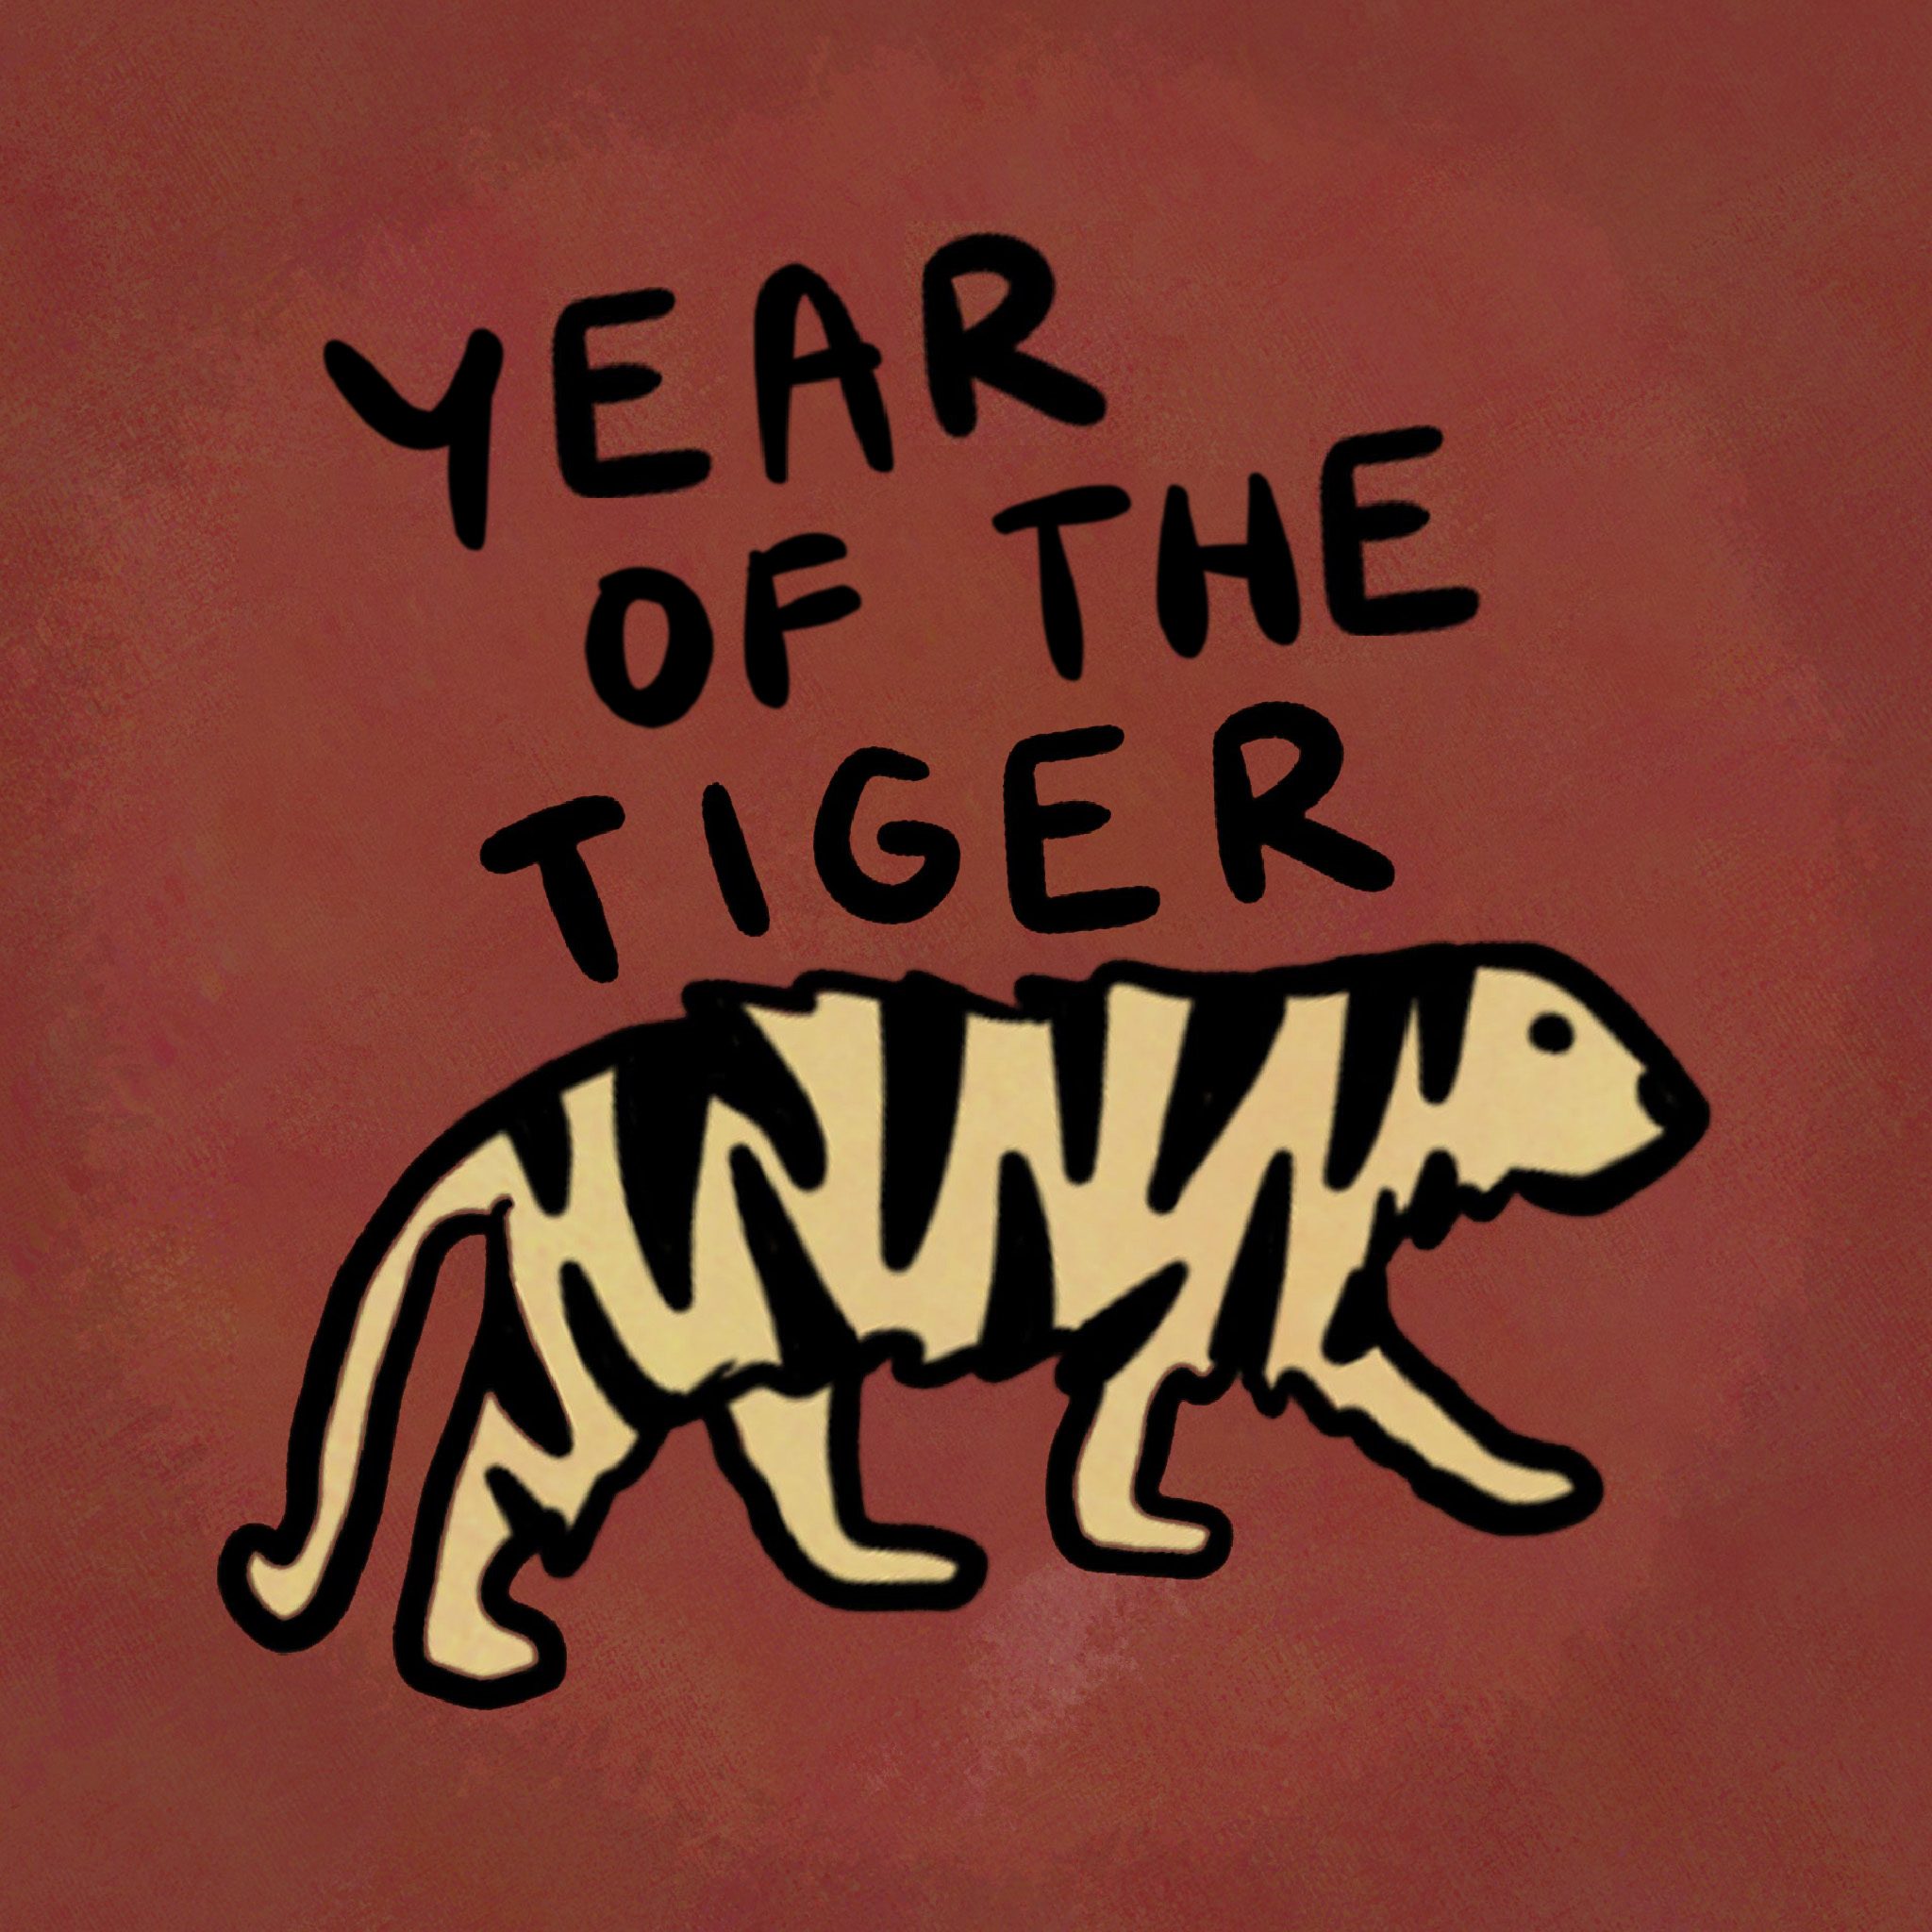 Tiger year